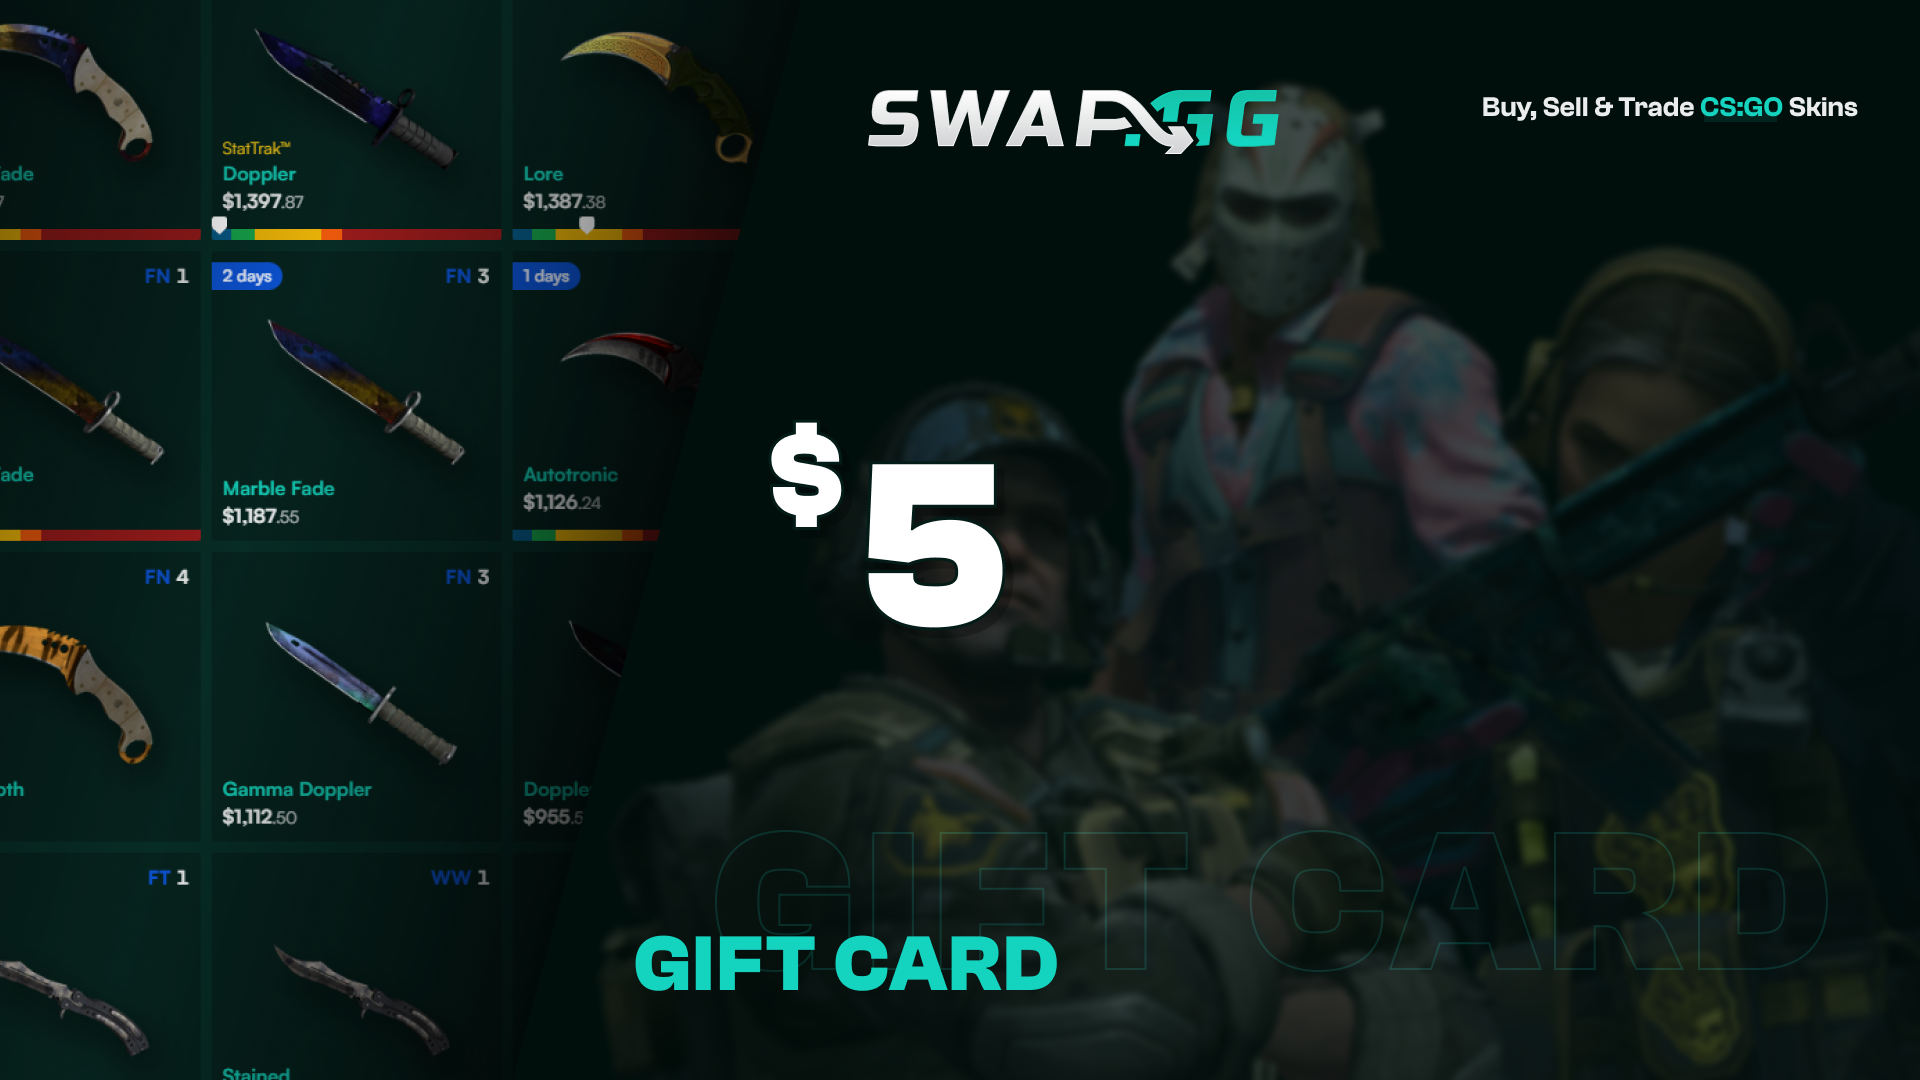 Swap.gg $5 Gift Card [$ 3.97]